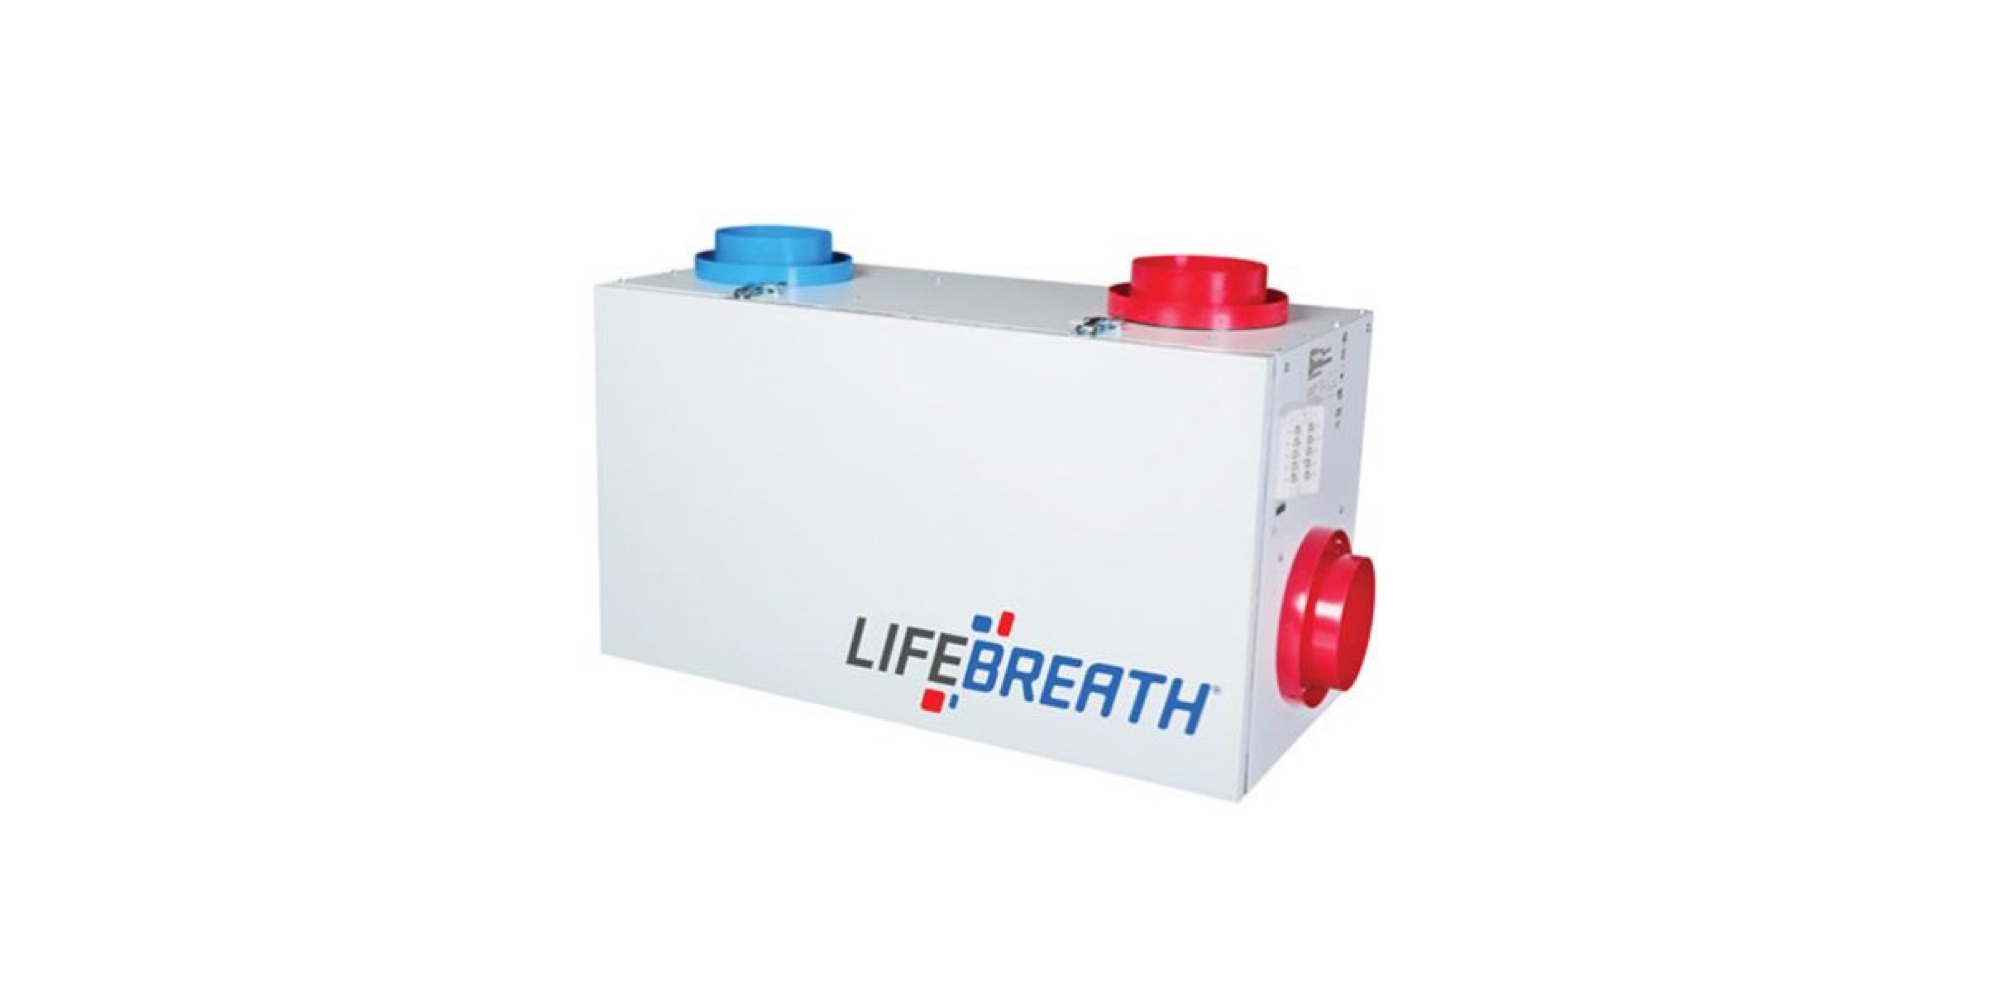 lifebreath heat recovery ventilator